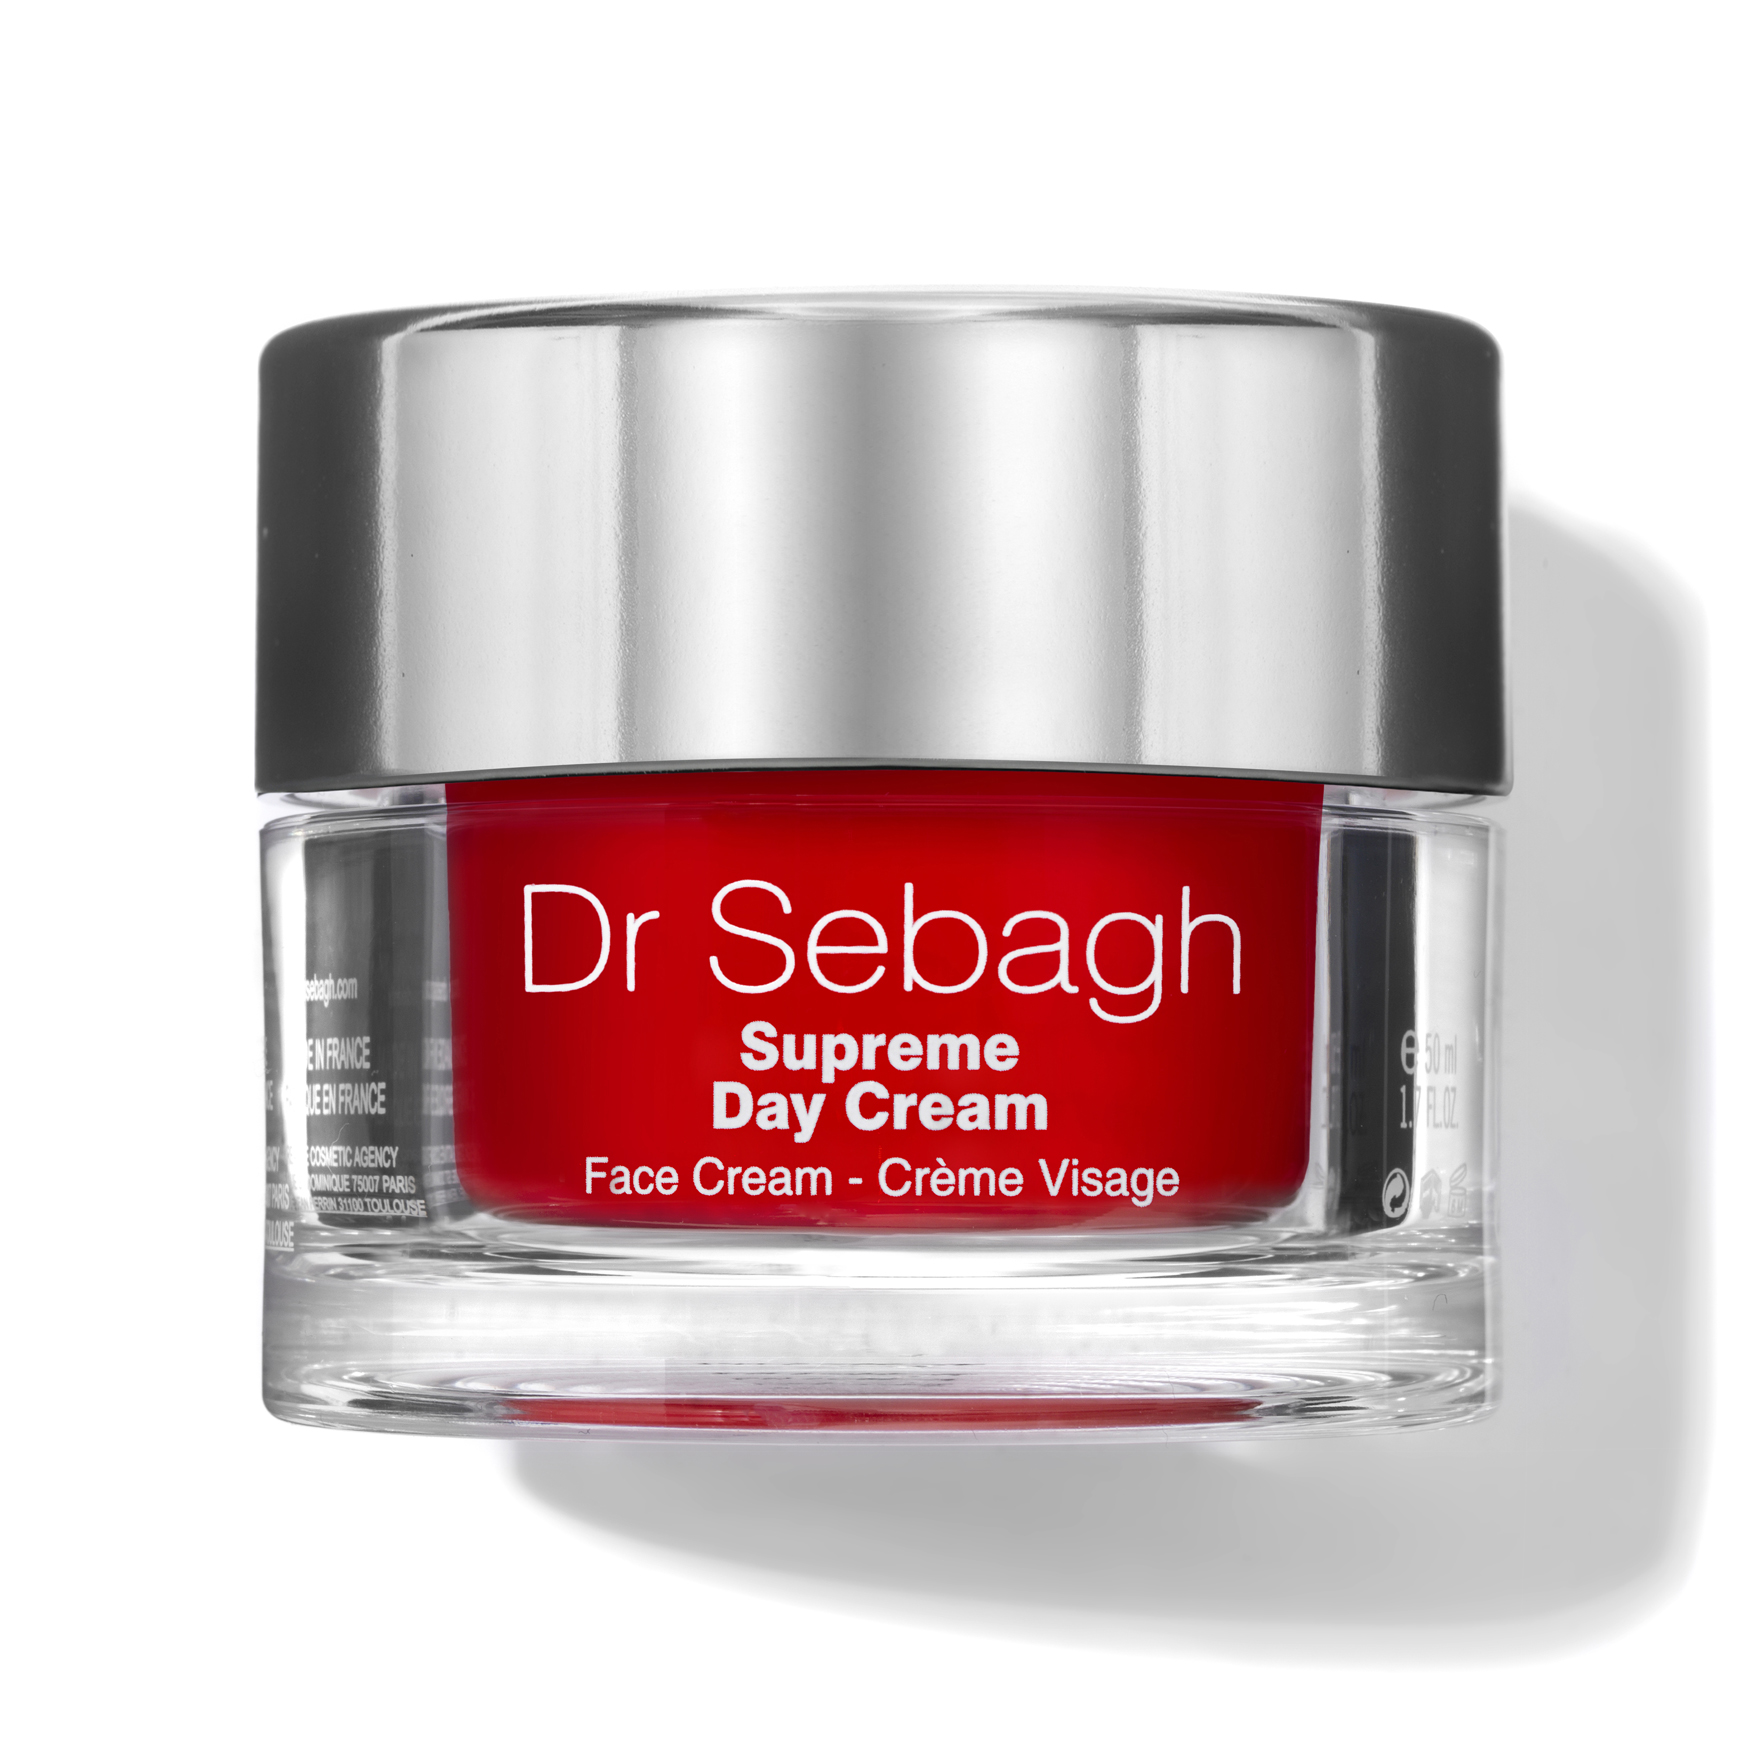 Dr Sebagh Supreme Day Cream | Space NK